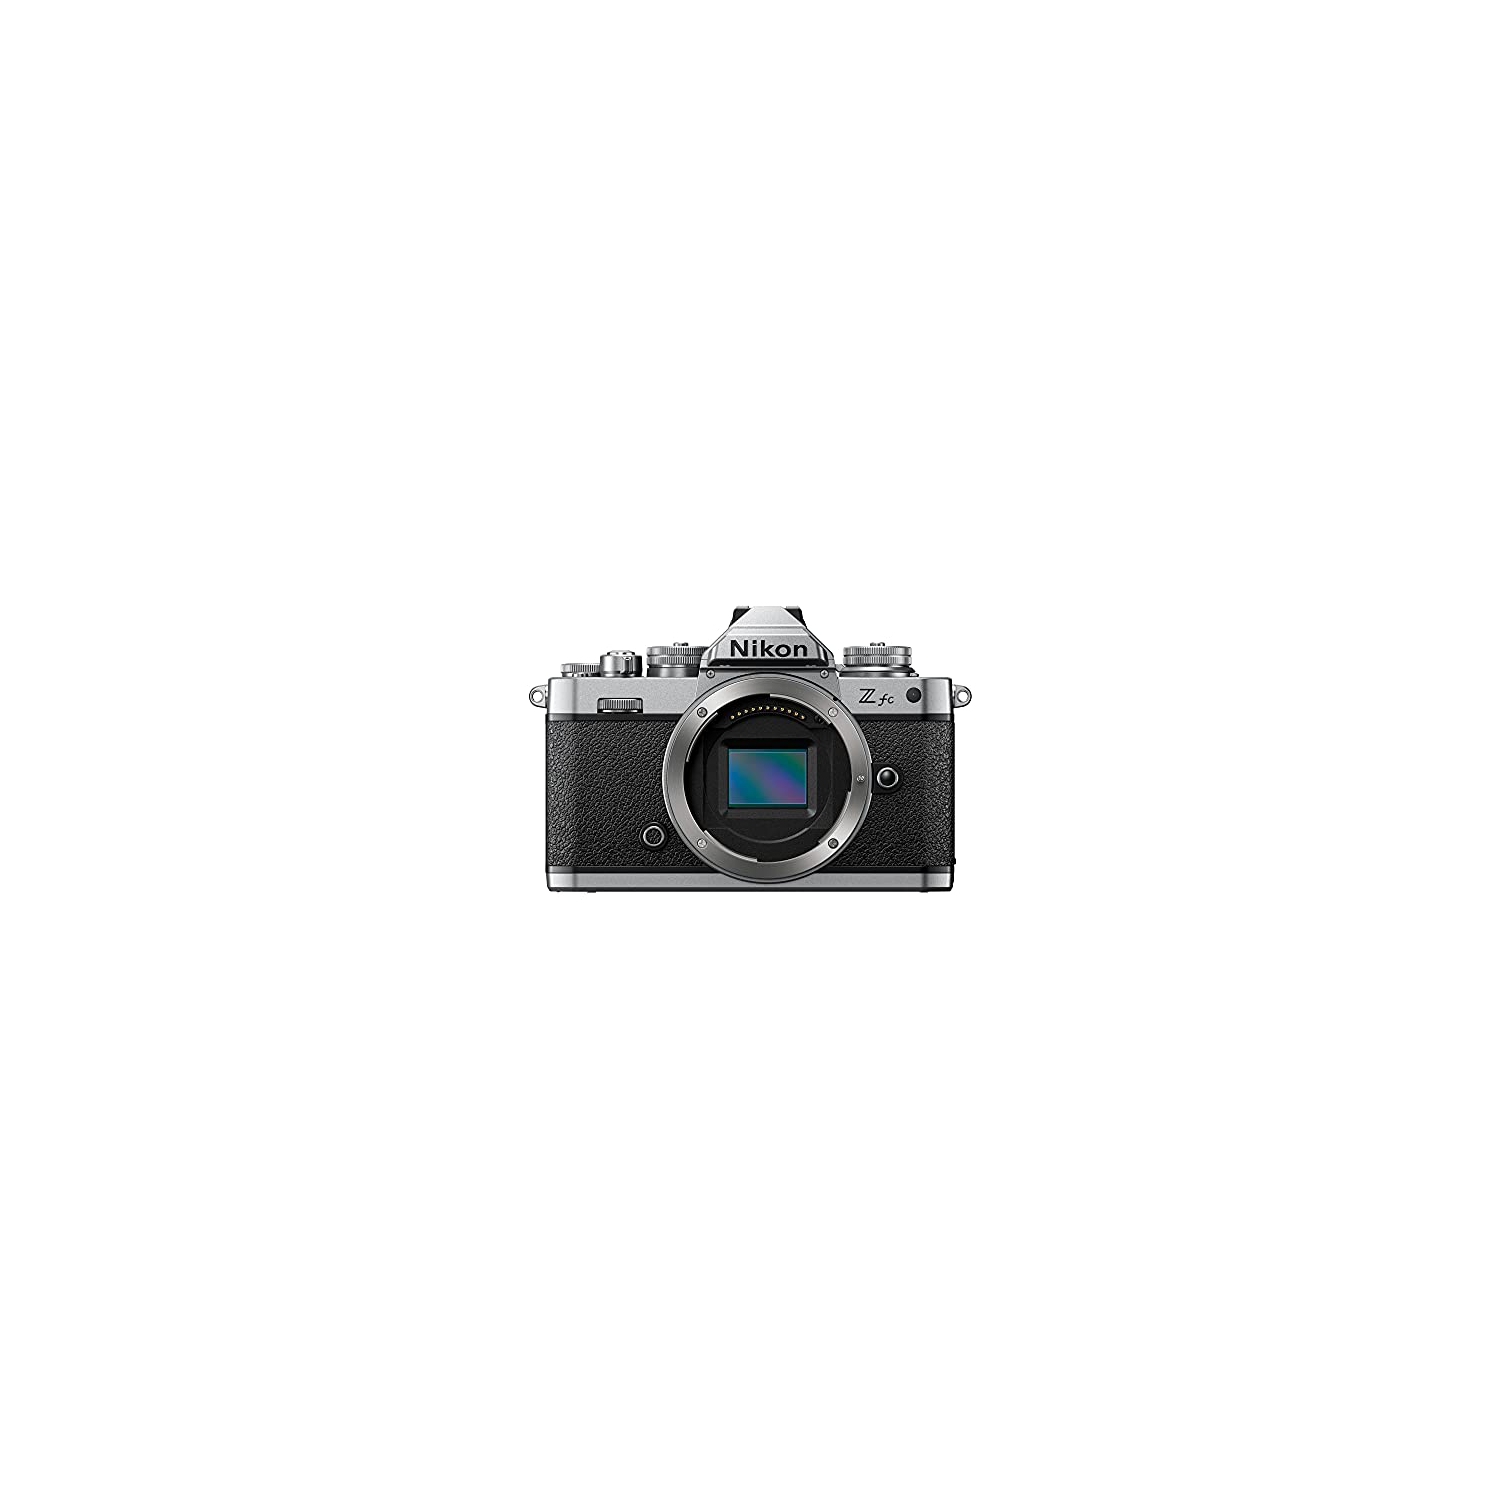 Nikon Z fc Mirrorless Digital Camera (Body Only)